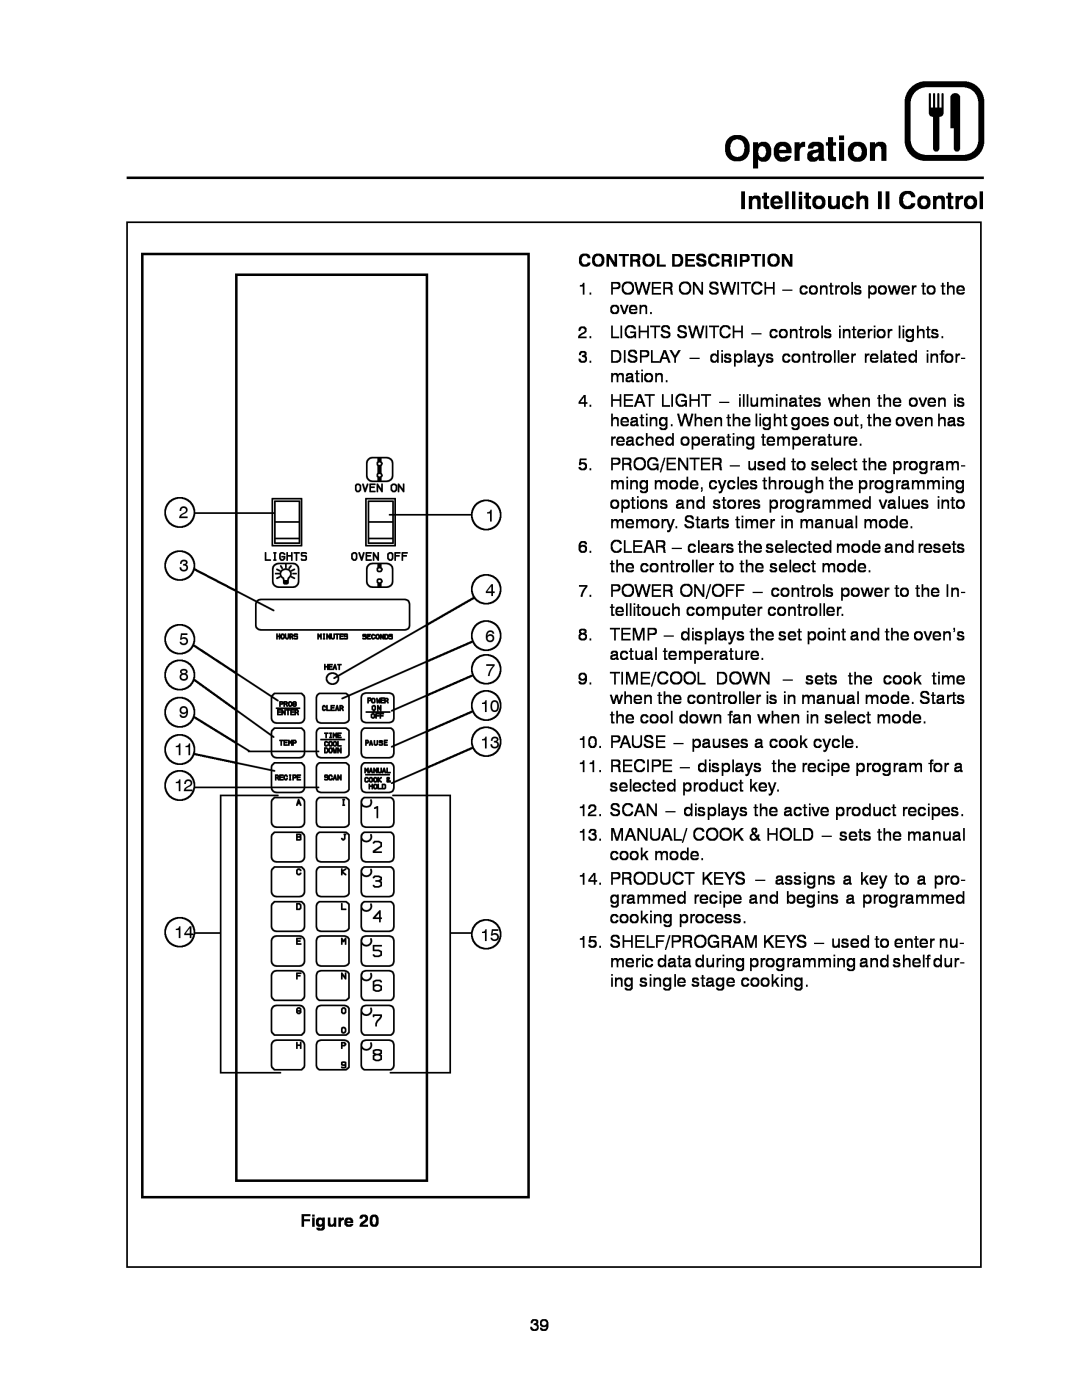 Blodgett DFG-100, DFG-200 manual Intellitouch II Control, Operation, Control Description 